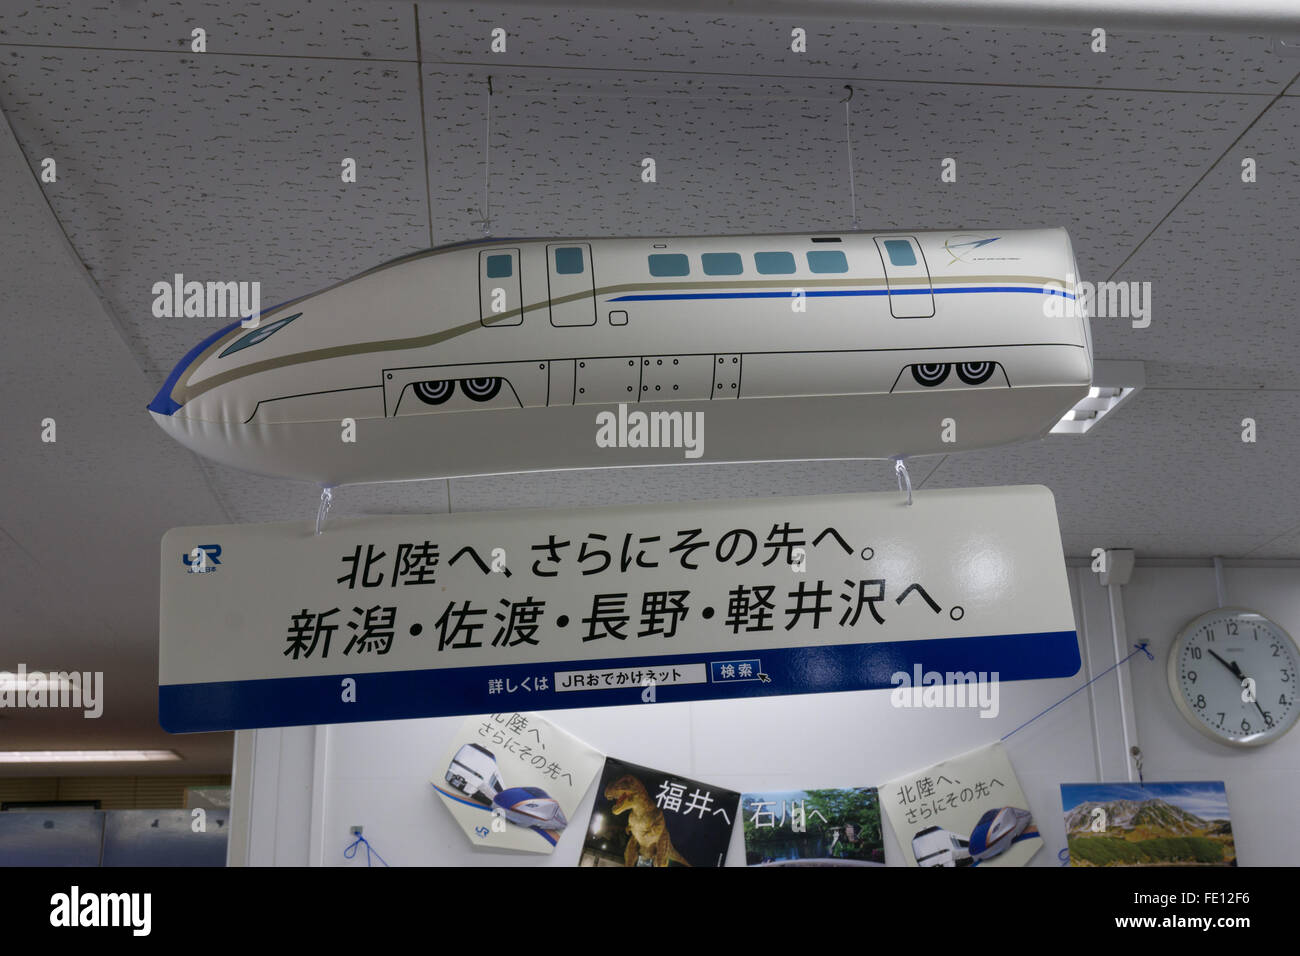 Shinkansen bullet train model at a rail station in Japan Stock Photo